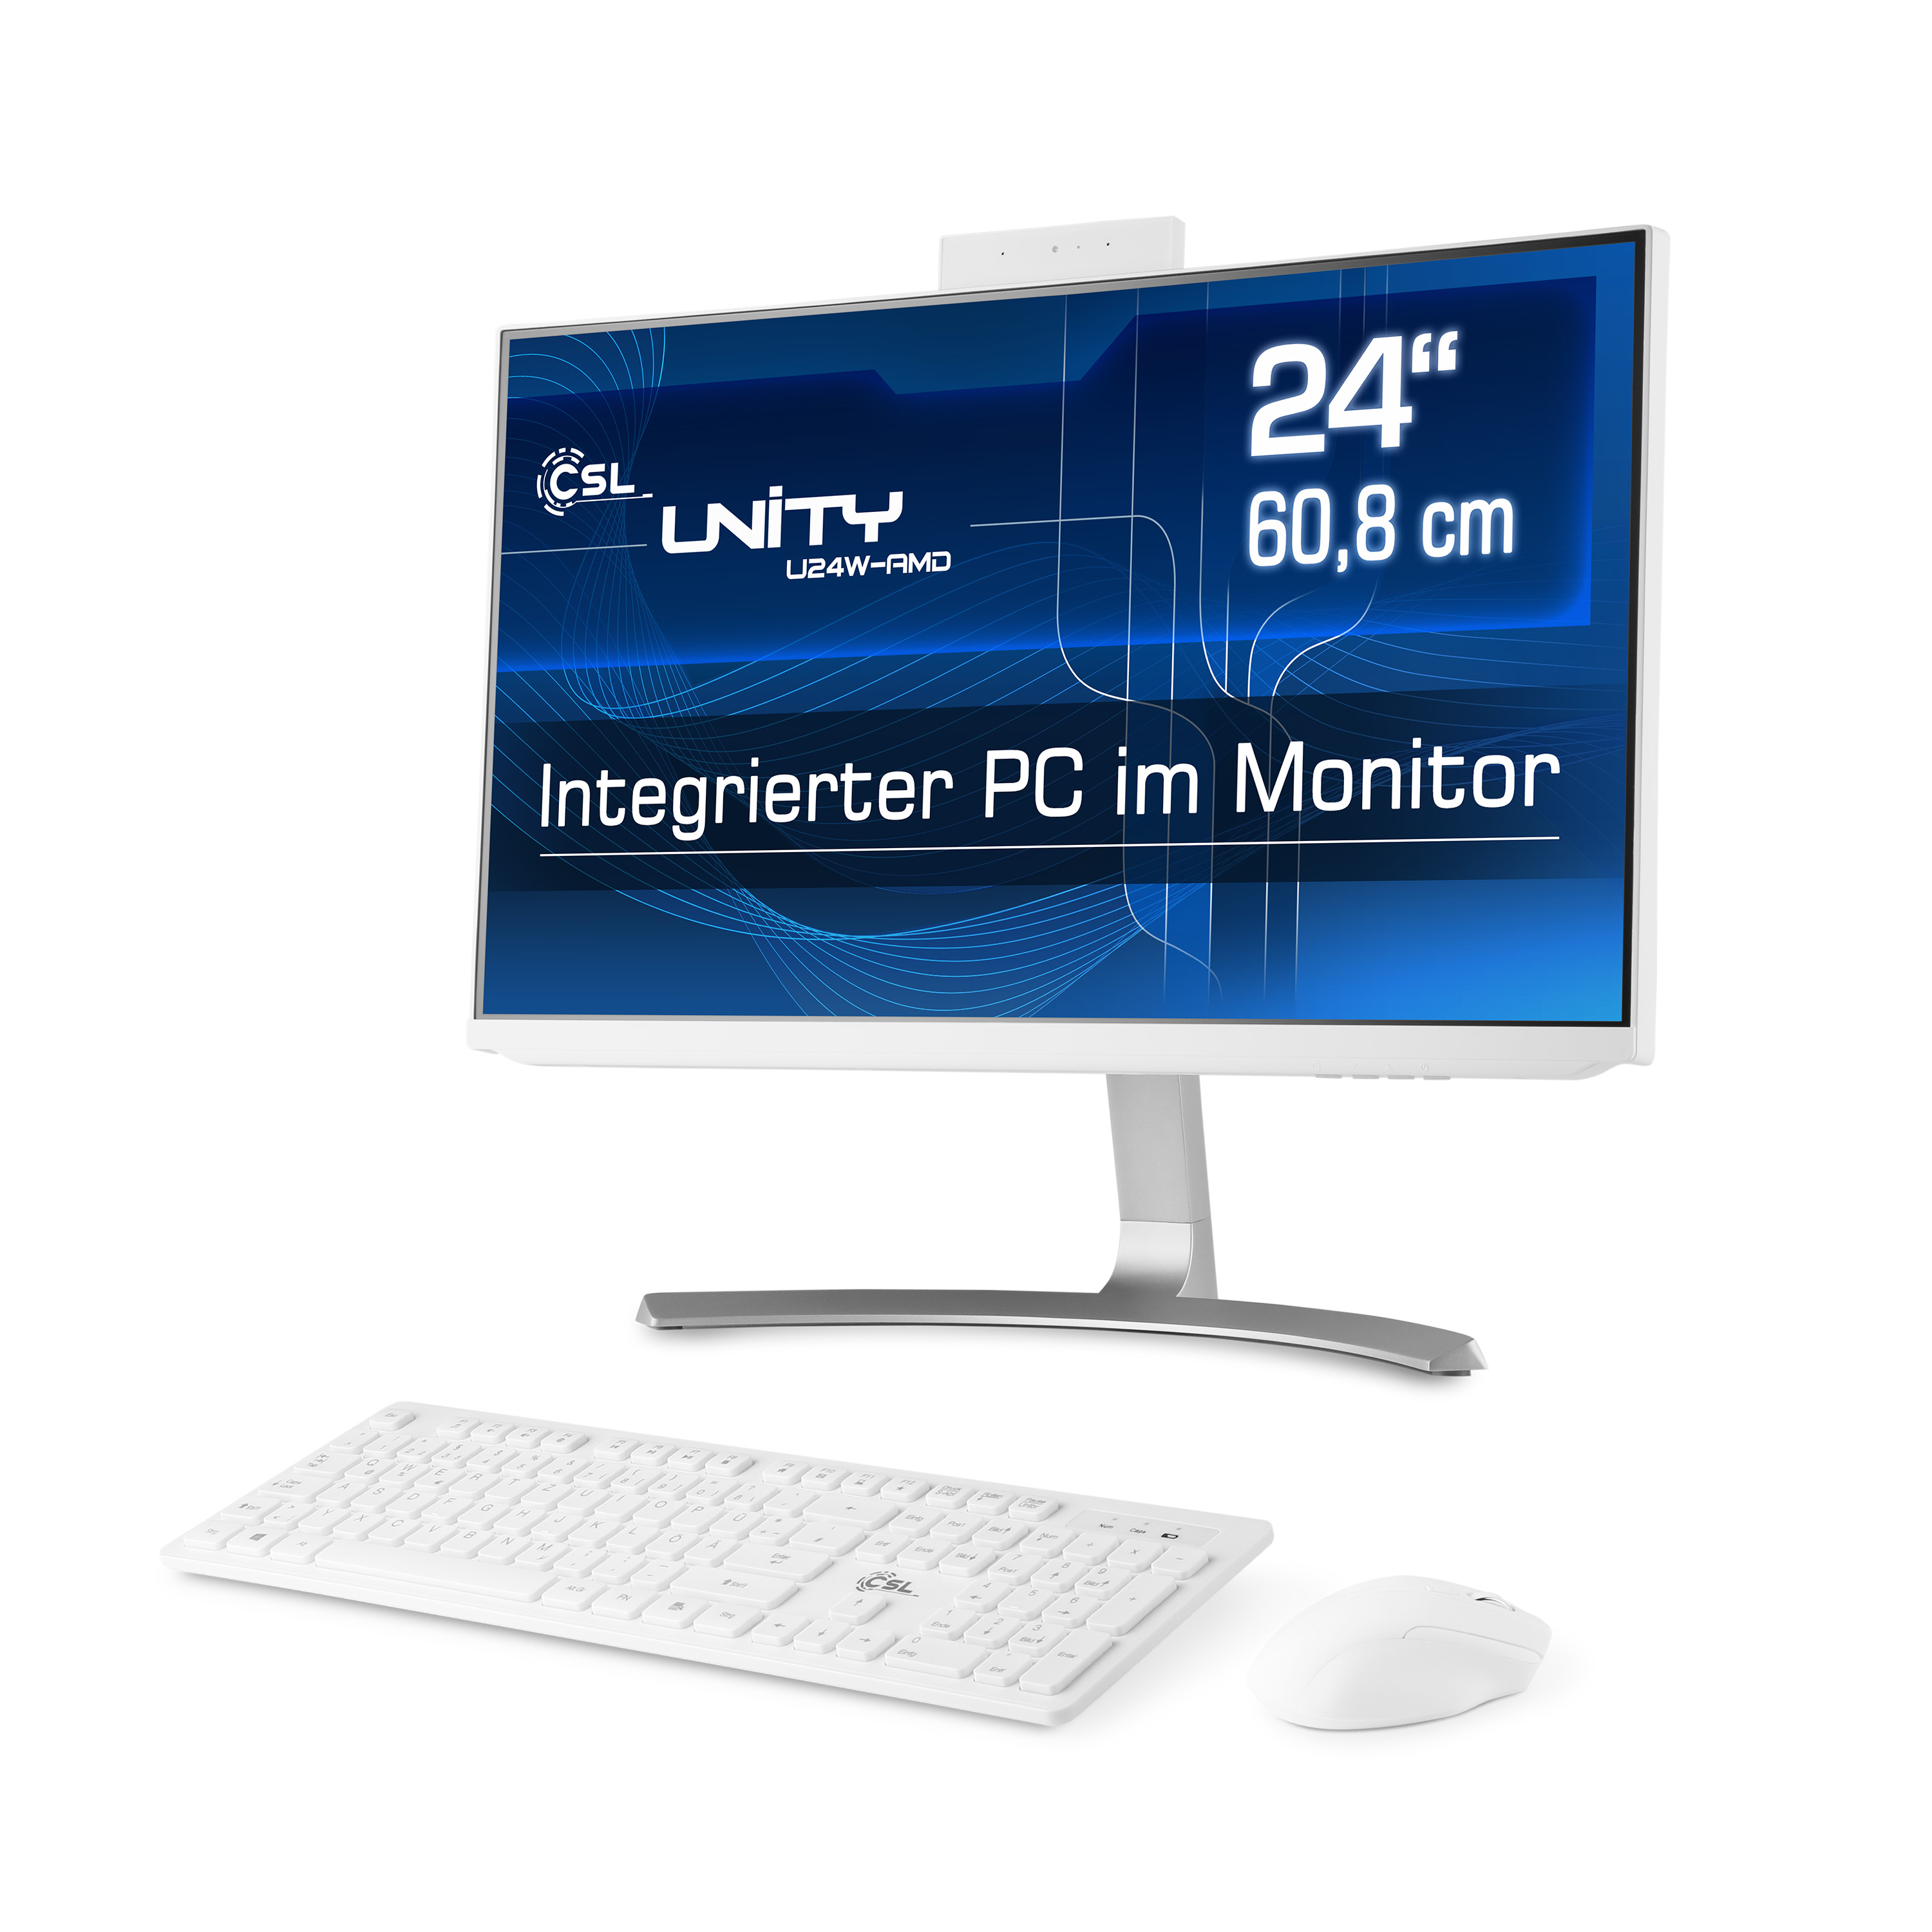 CSL 1000 U24W-AMD SSD, 5650GE / Radeon mit 1000 GB AMD Win GB Display, RAM, GB Home, 11 / 16 Graphics, 16 23,8 weiß Zoll All-in-One-PC RAM / / GB Unity